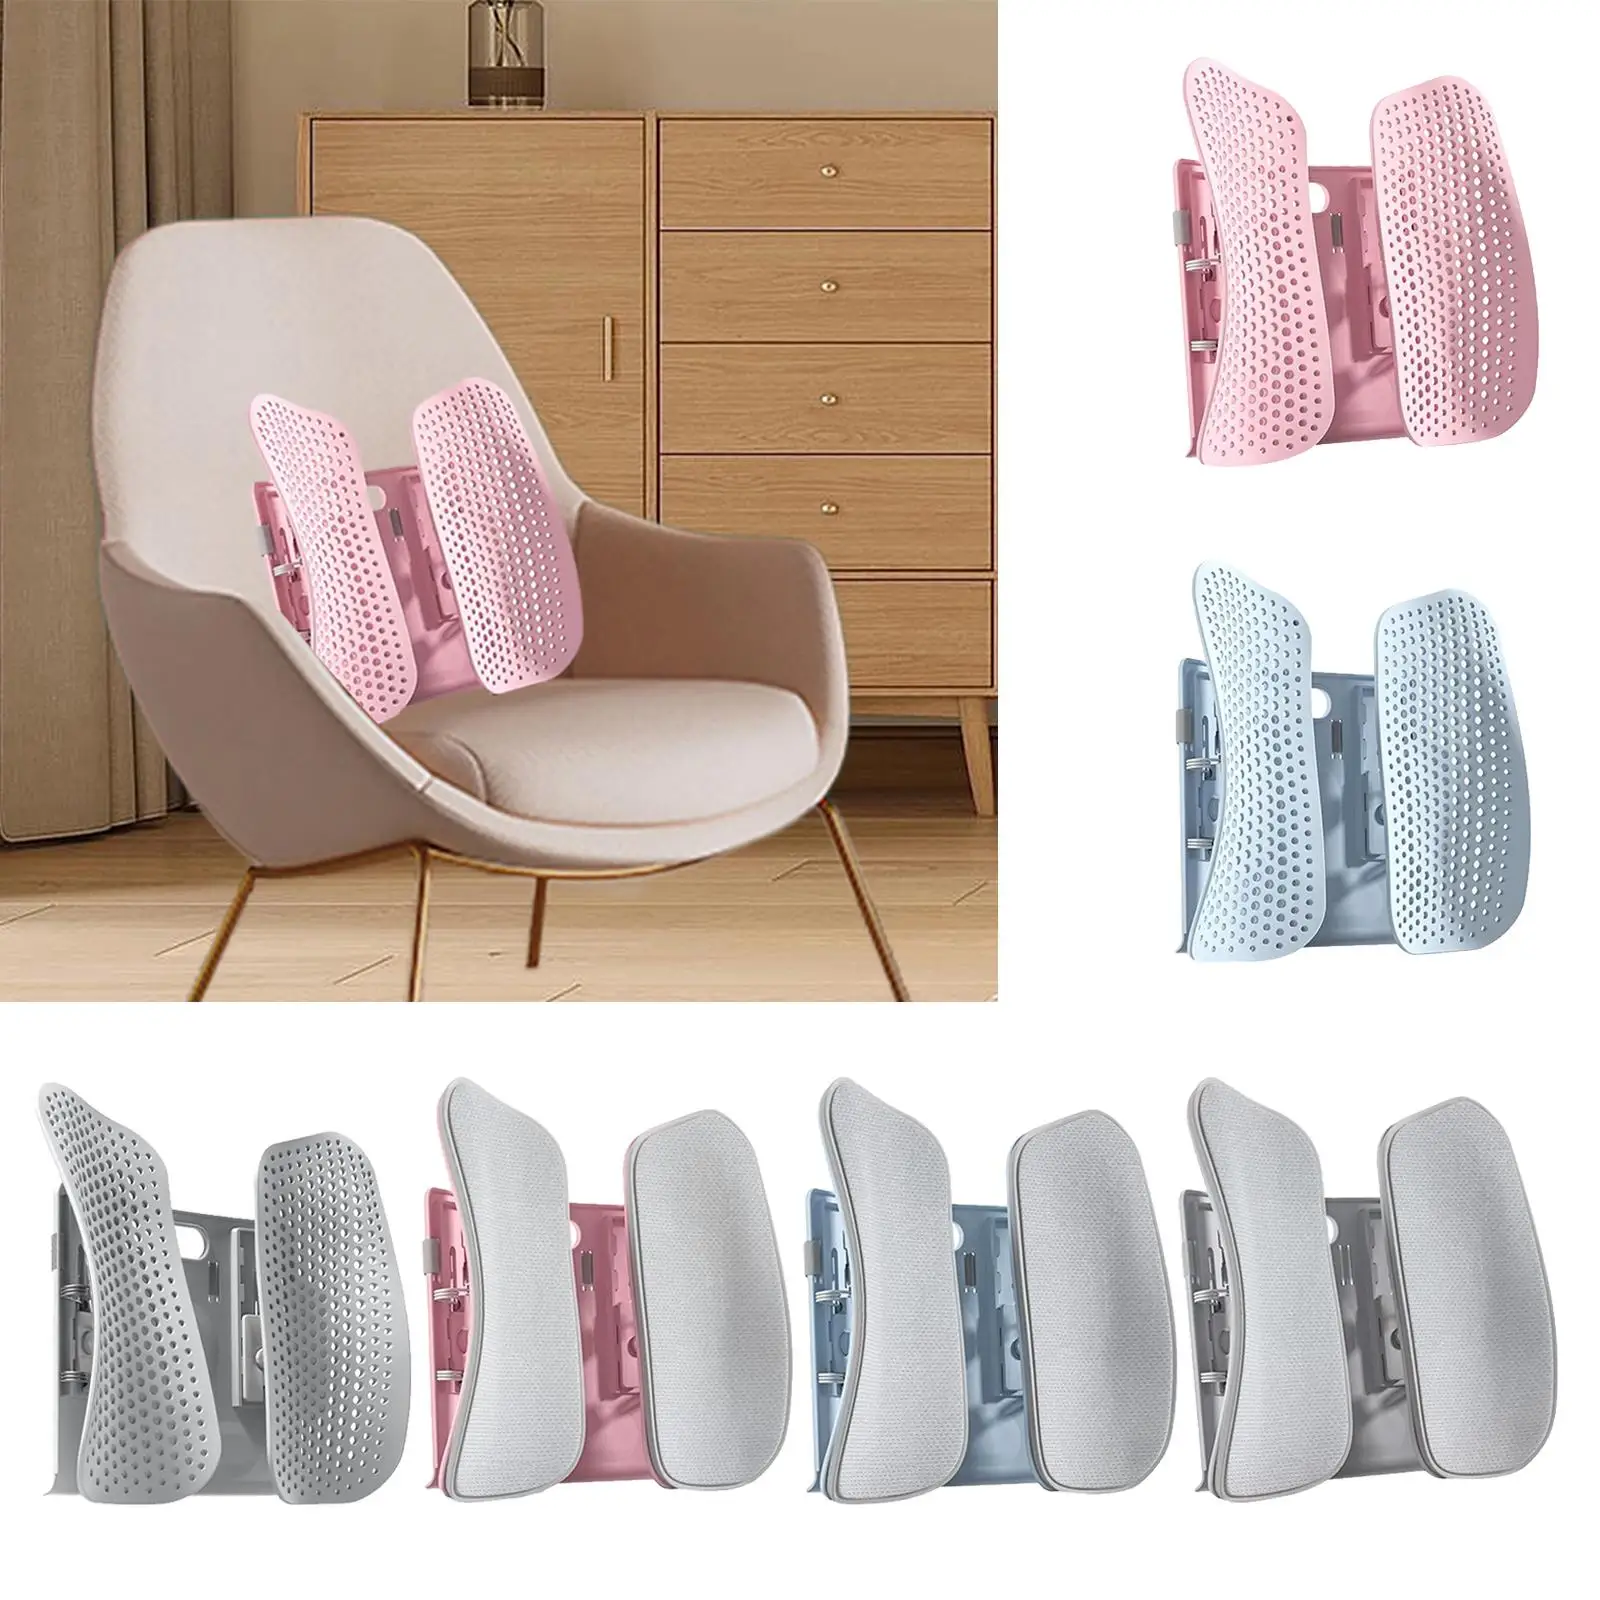 Backrest Cushion for Seat, Ergonomic Backrest Cushion, Non-Slip Chair Pad,